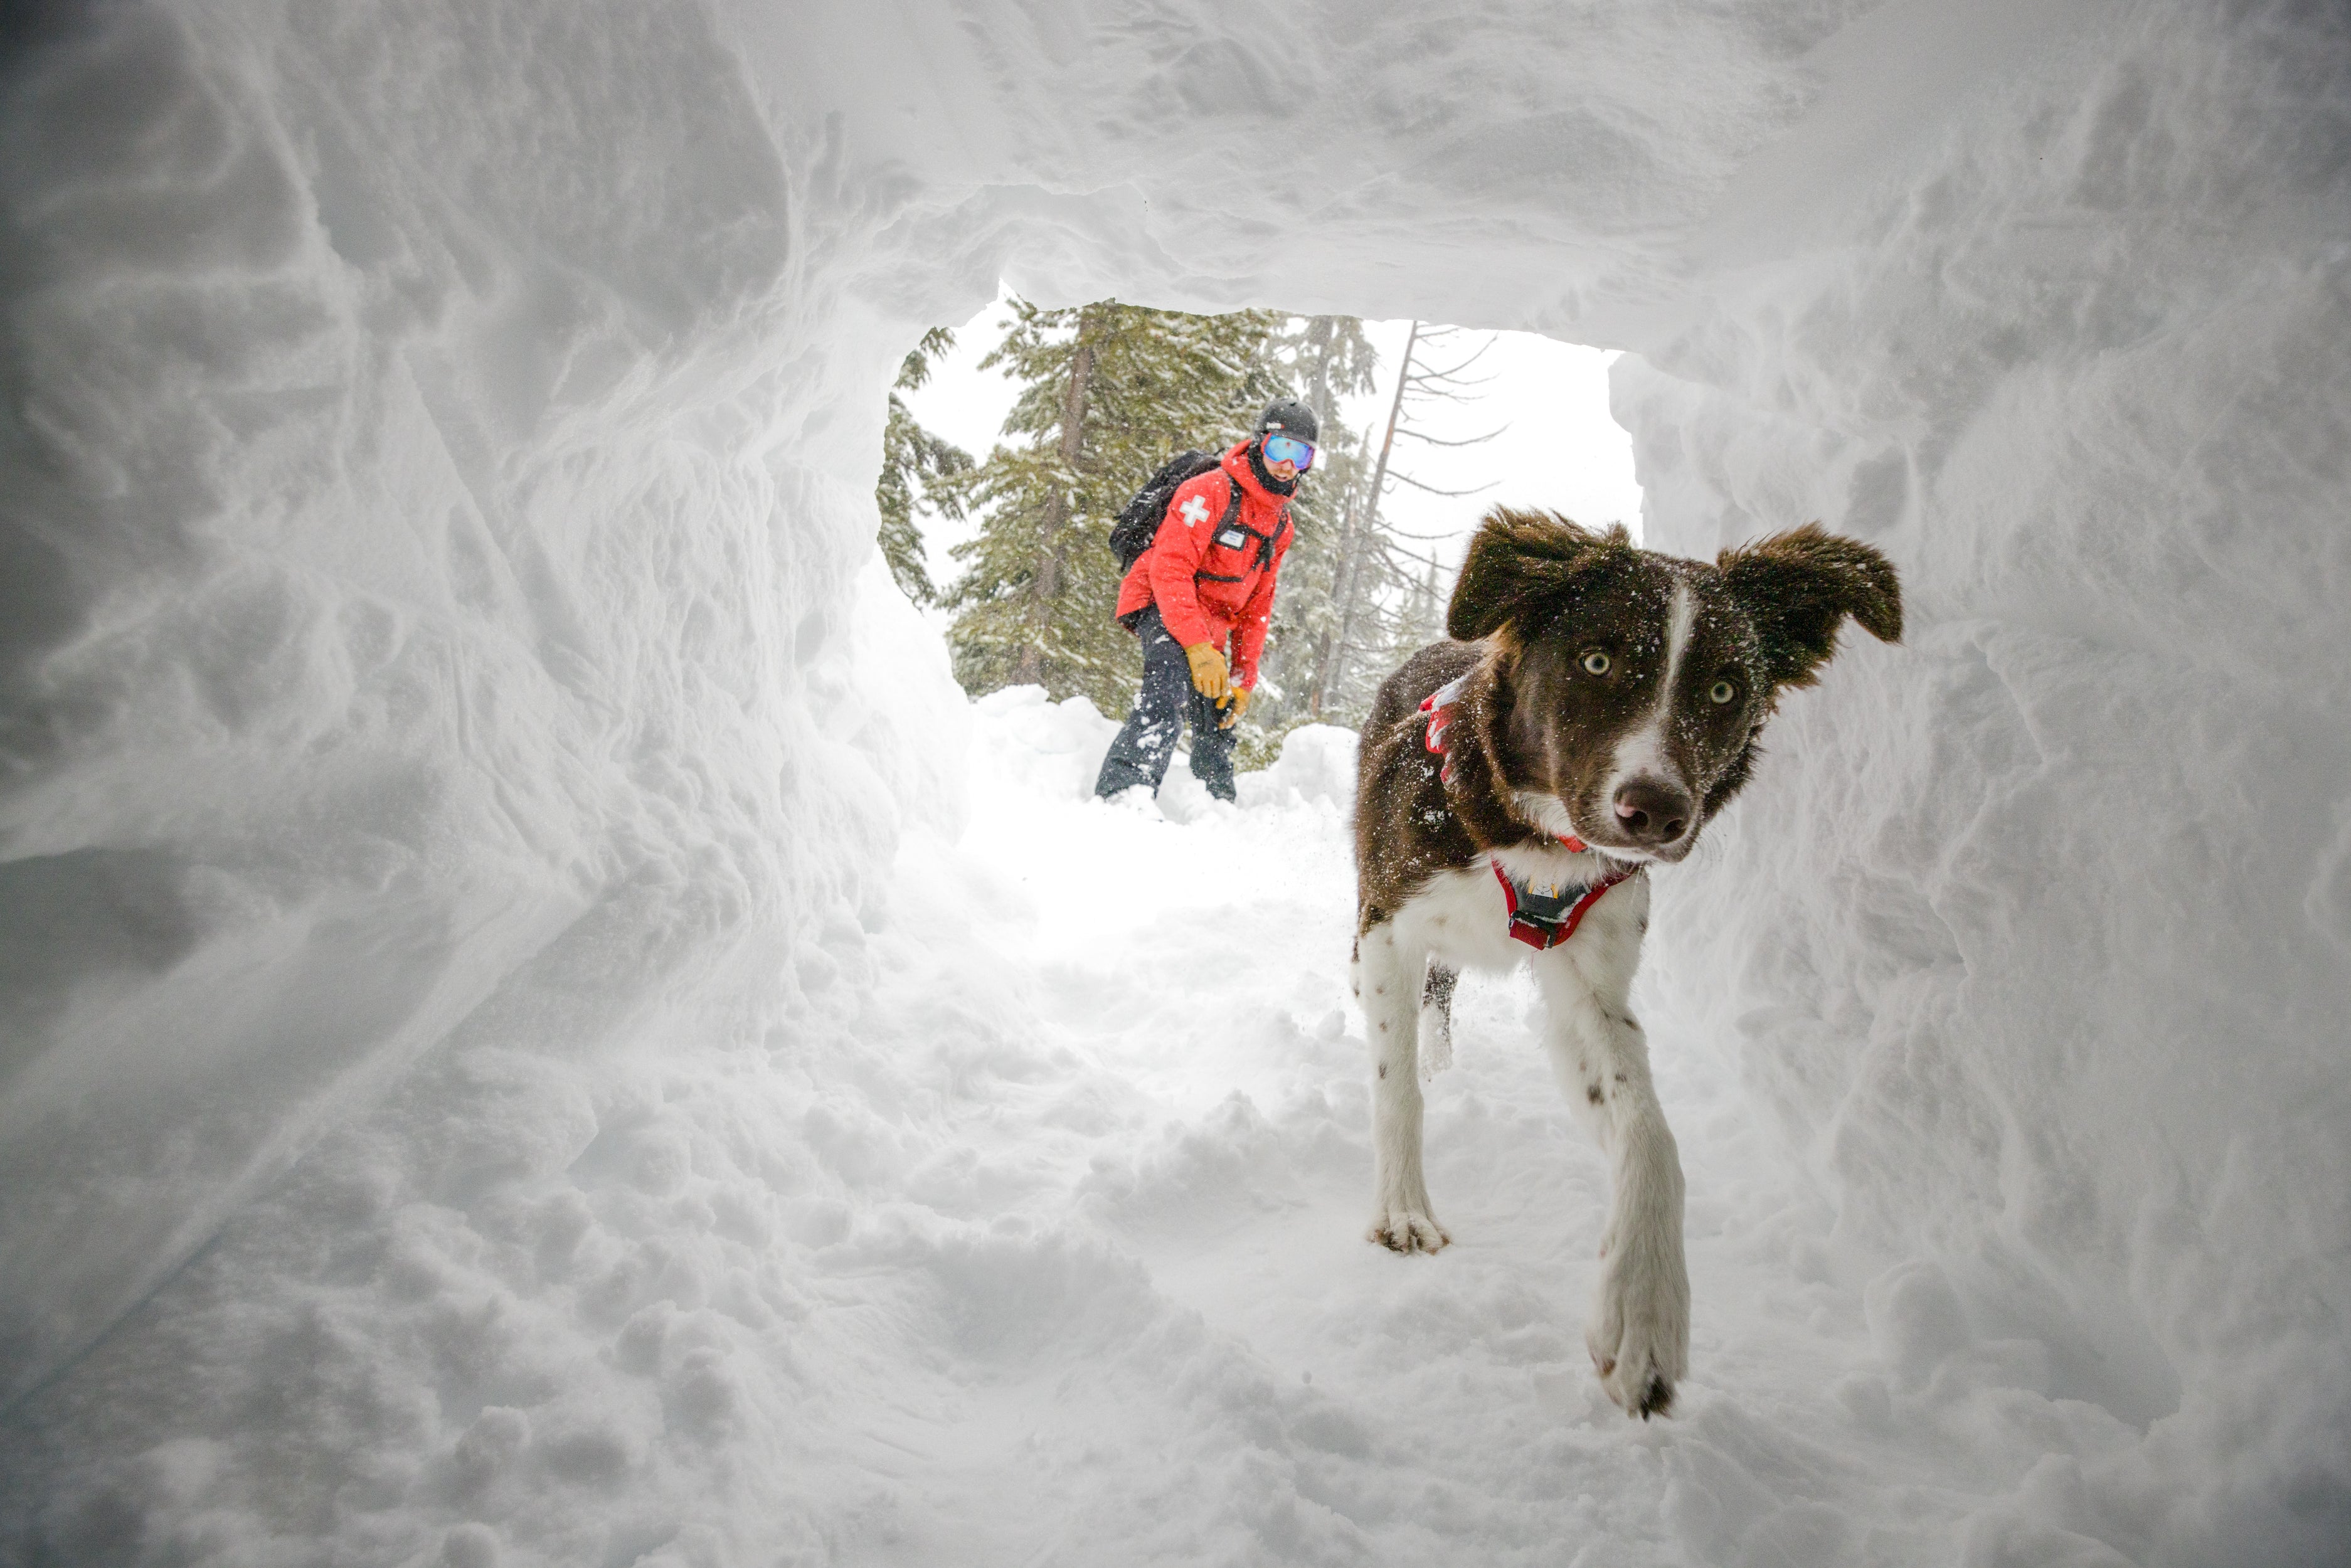 Ruddy the avalanche dog runs into a snow cave.